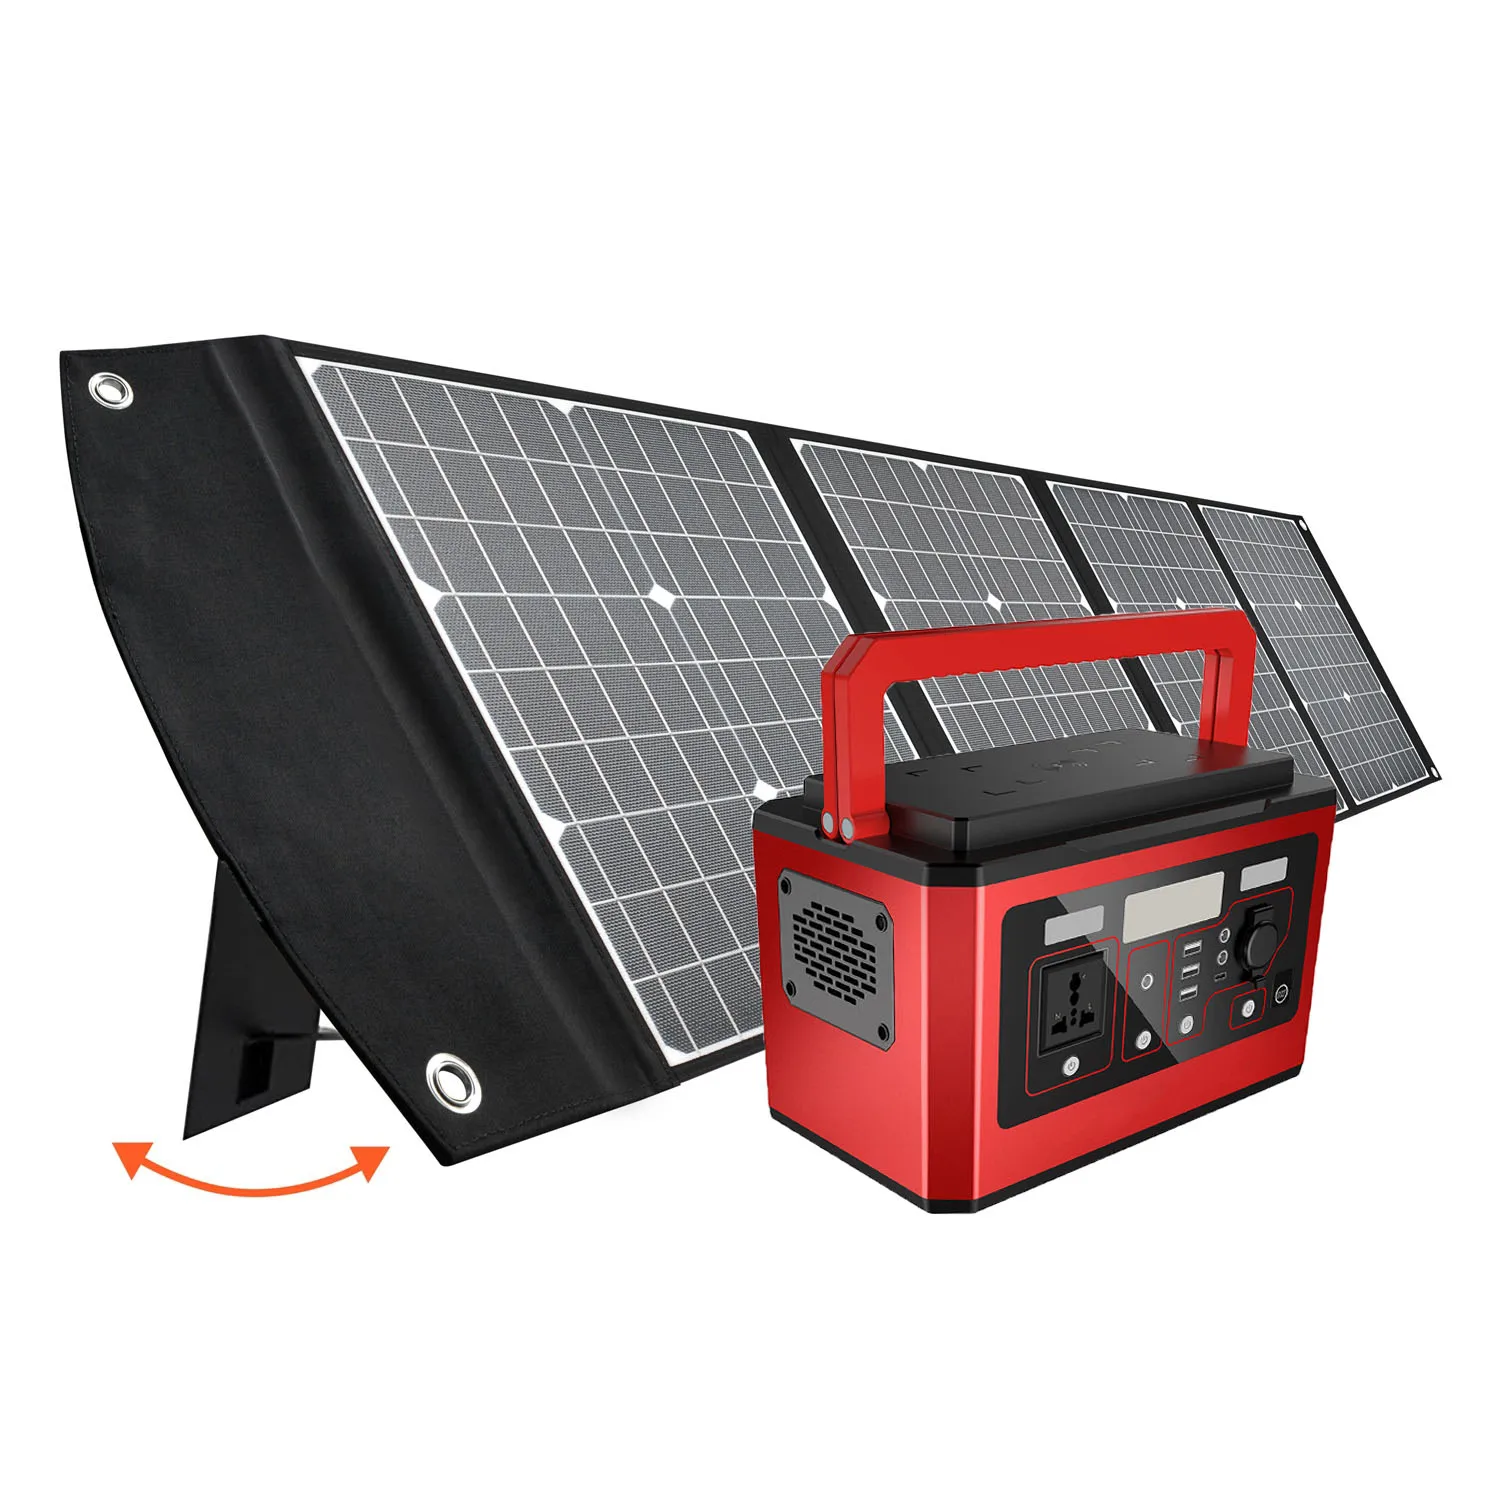 RHINO POWER 220v Lithium Portable Power Station Solar 200w 500w Solar Charging Portable Power Station With Radio And Solar Panel